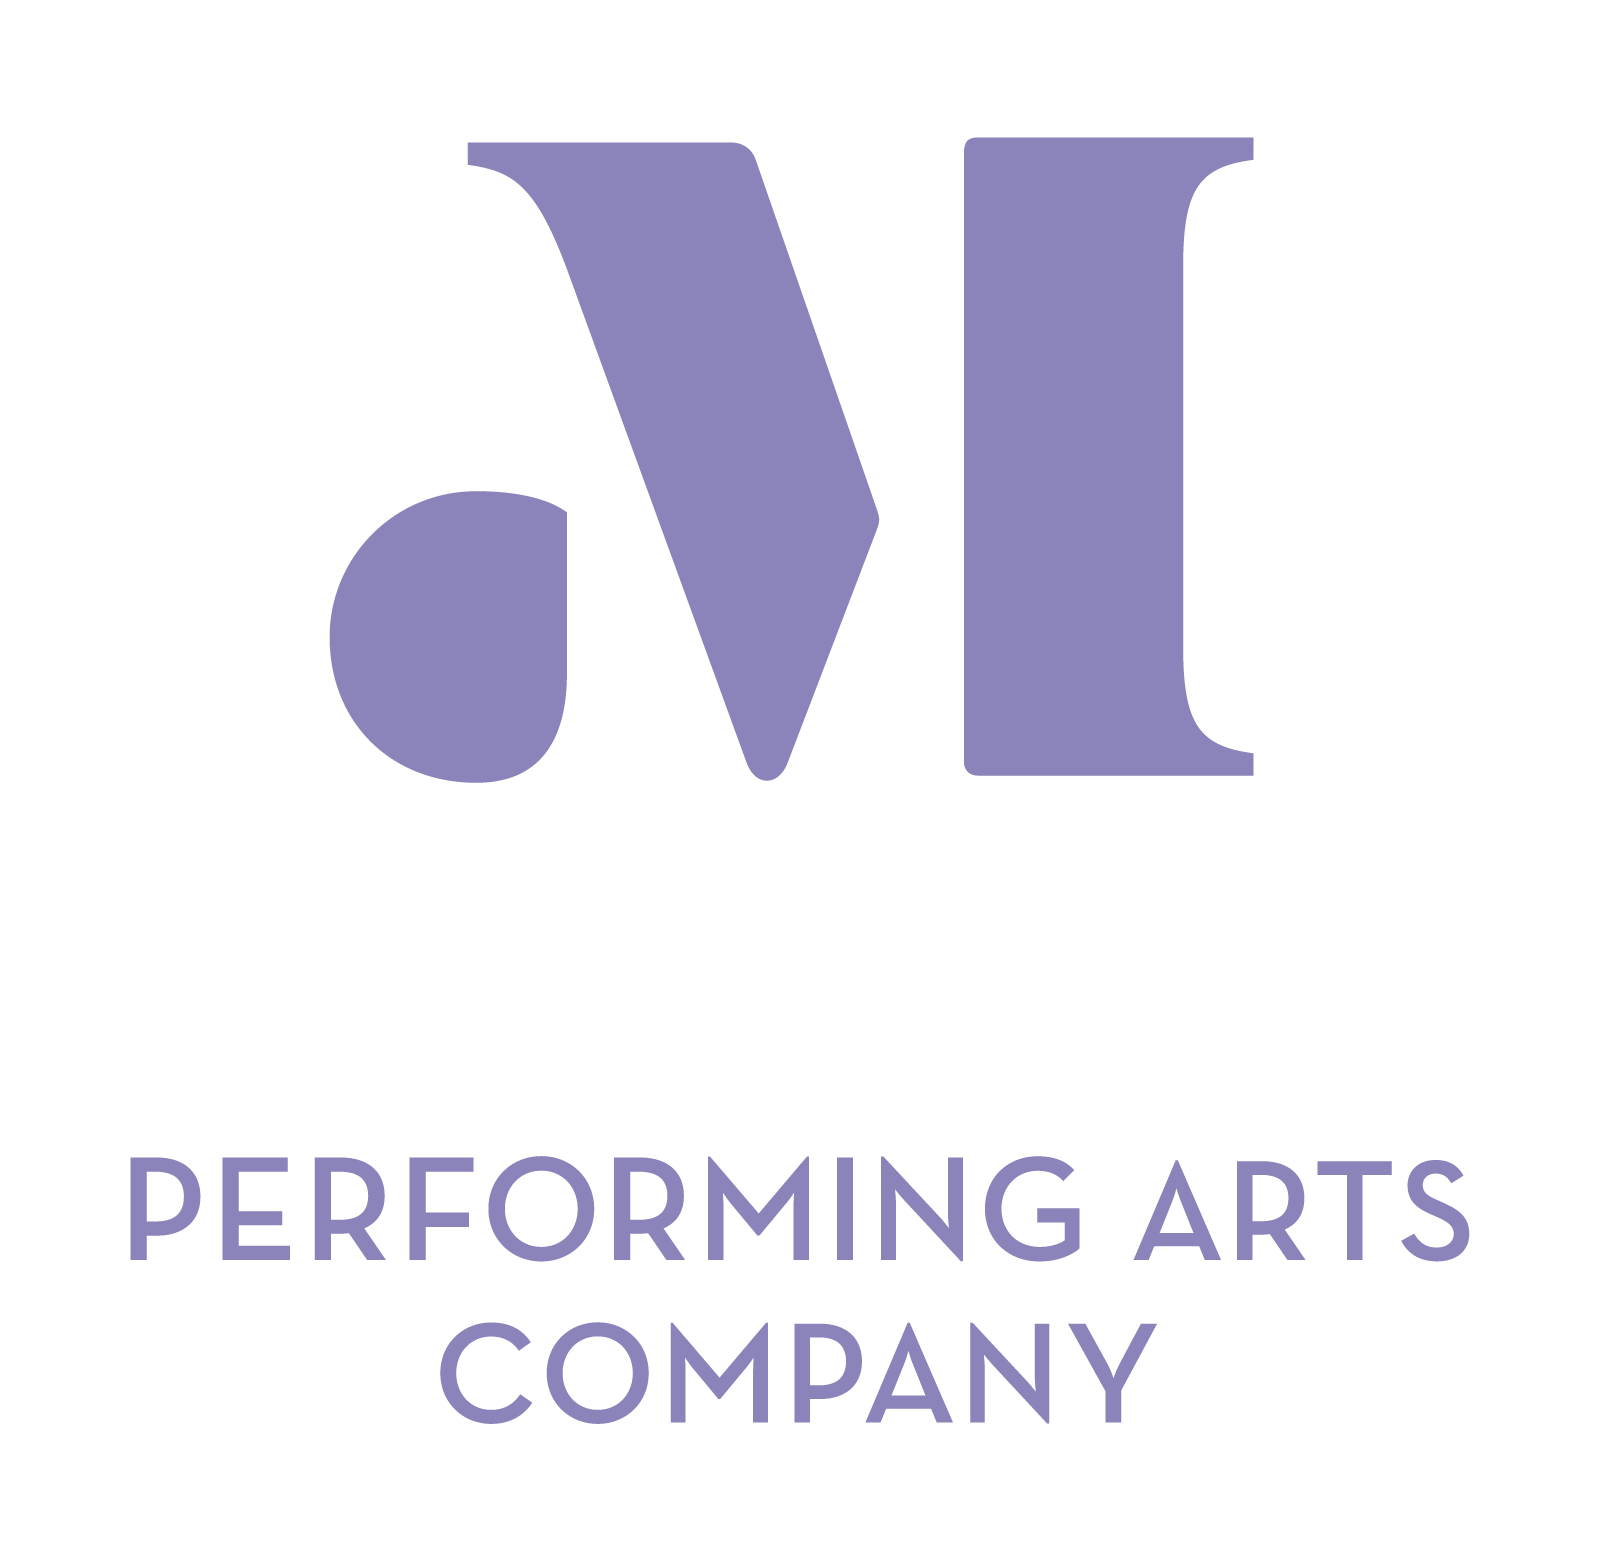 Mpac Performing arts company logo